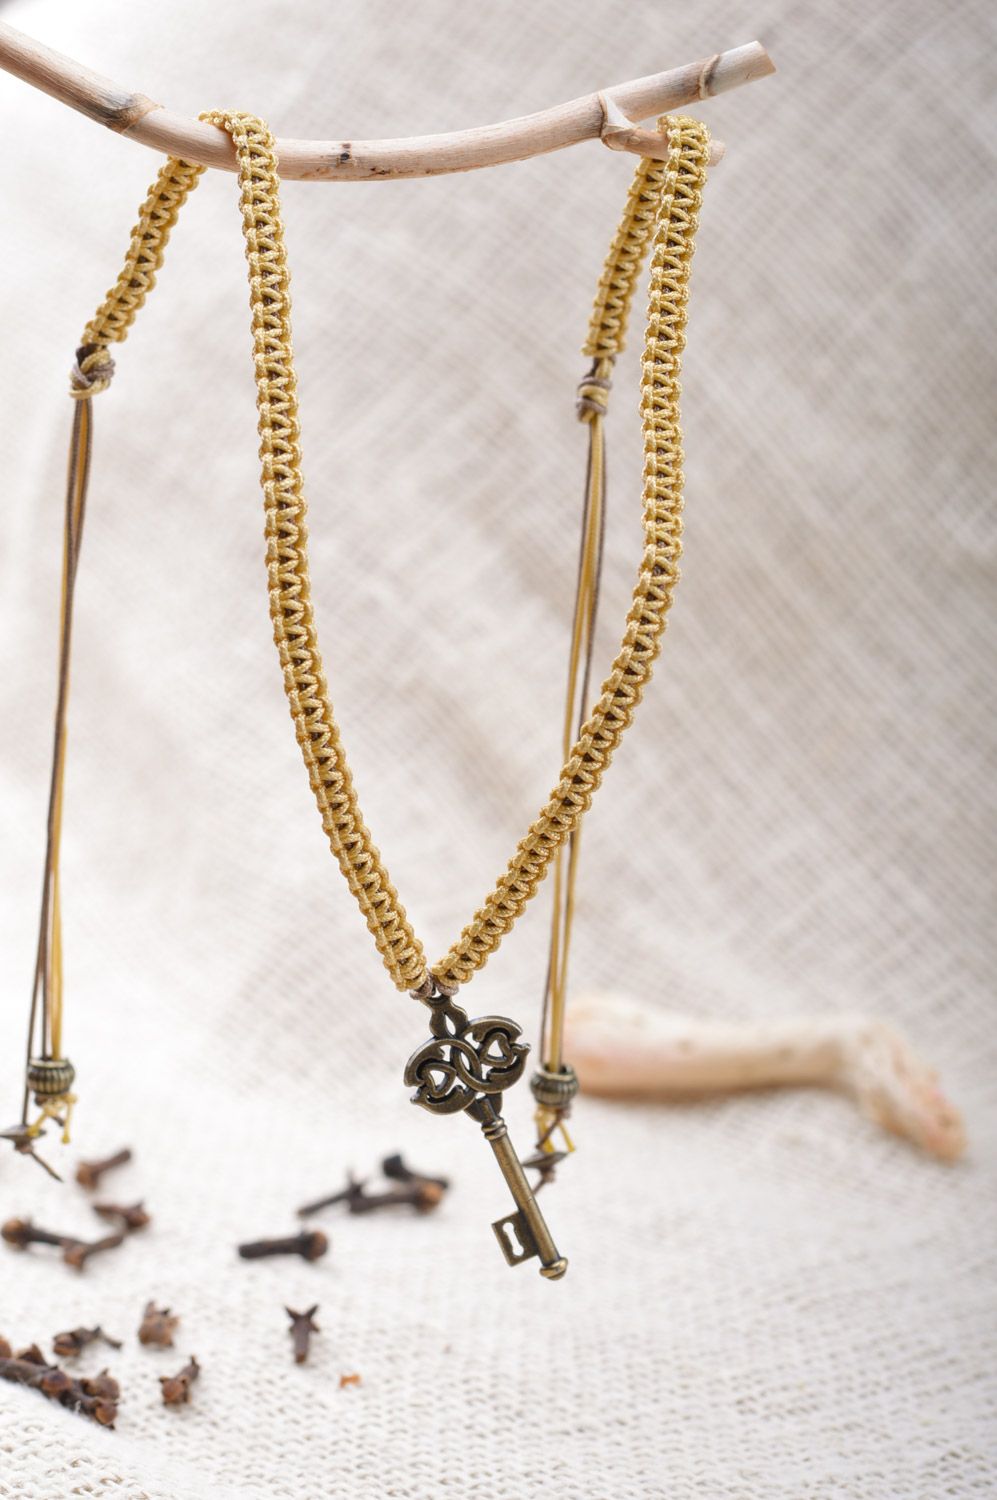 Handmade friendship wrist bracelet woven of cord with metal key-shaped charm photo 5